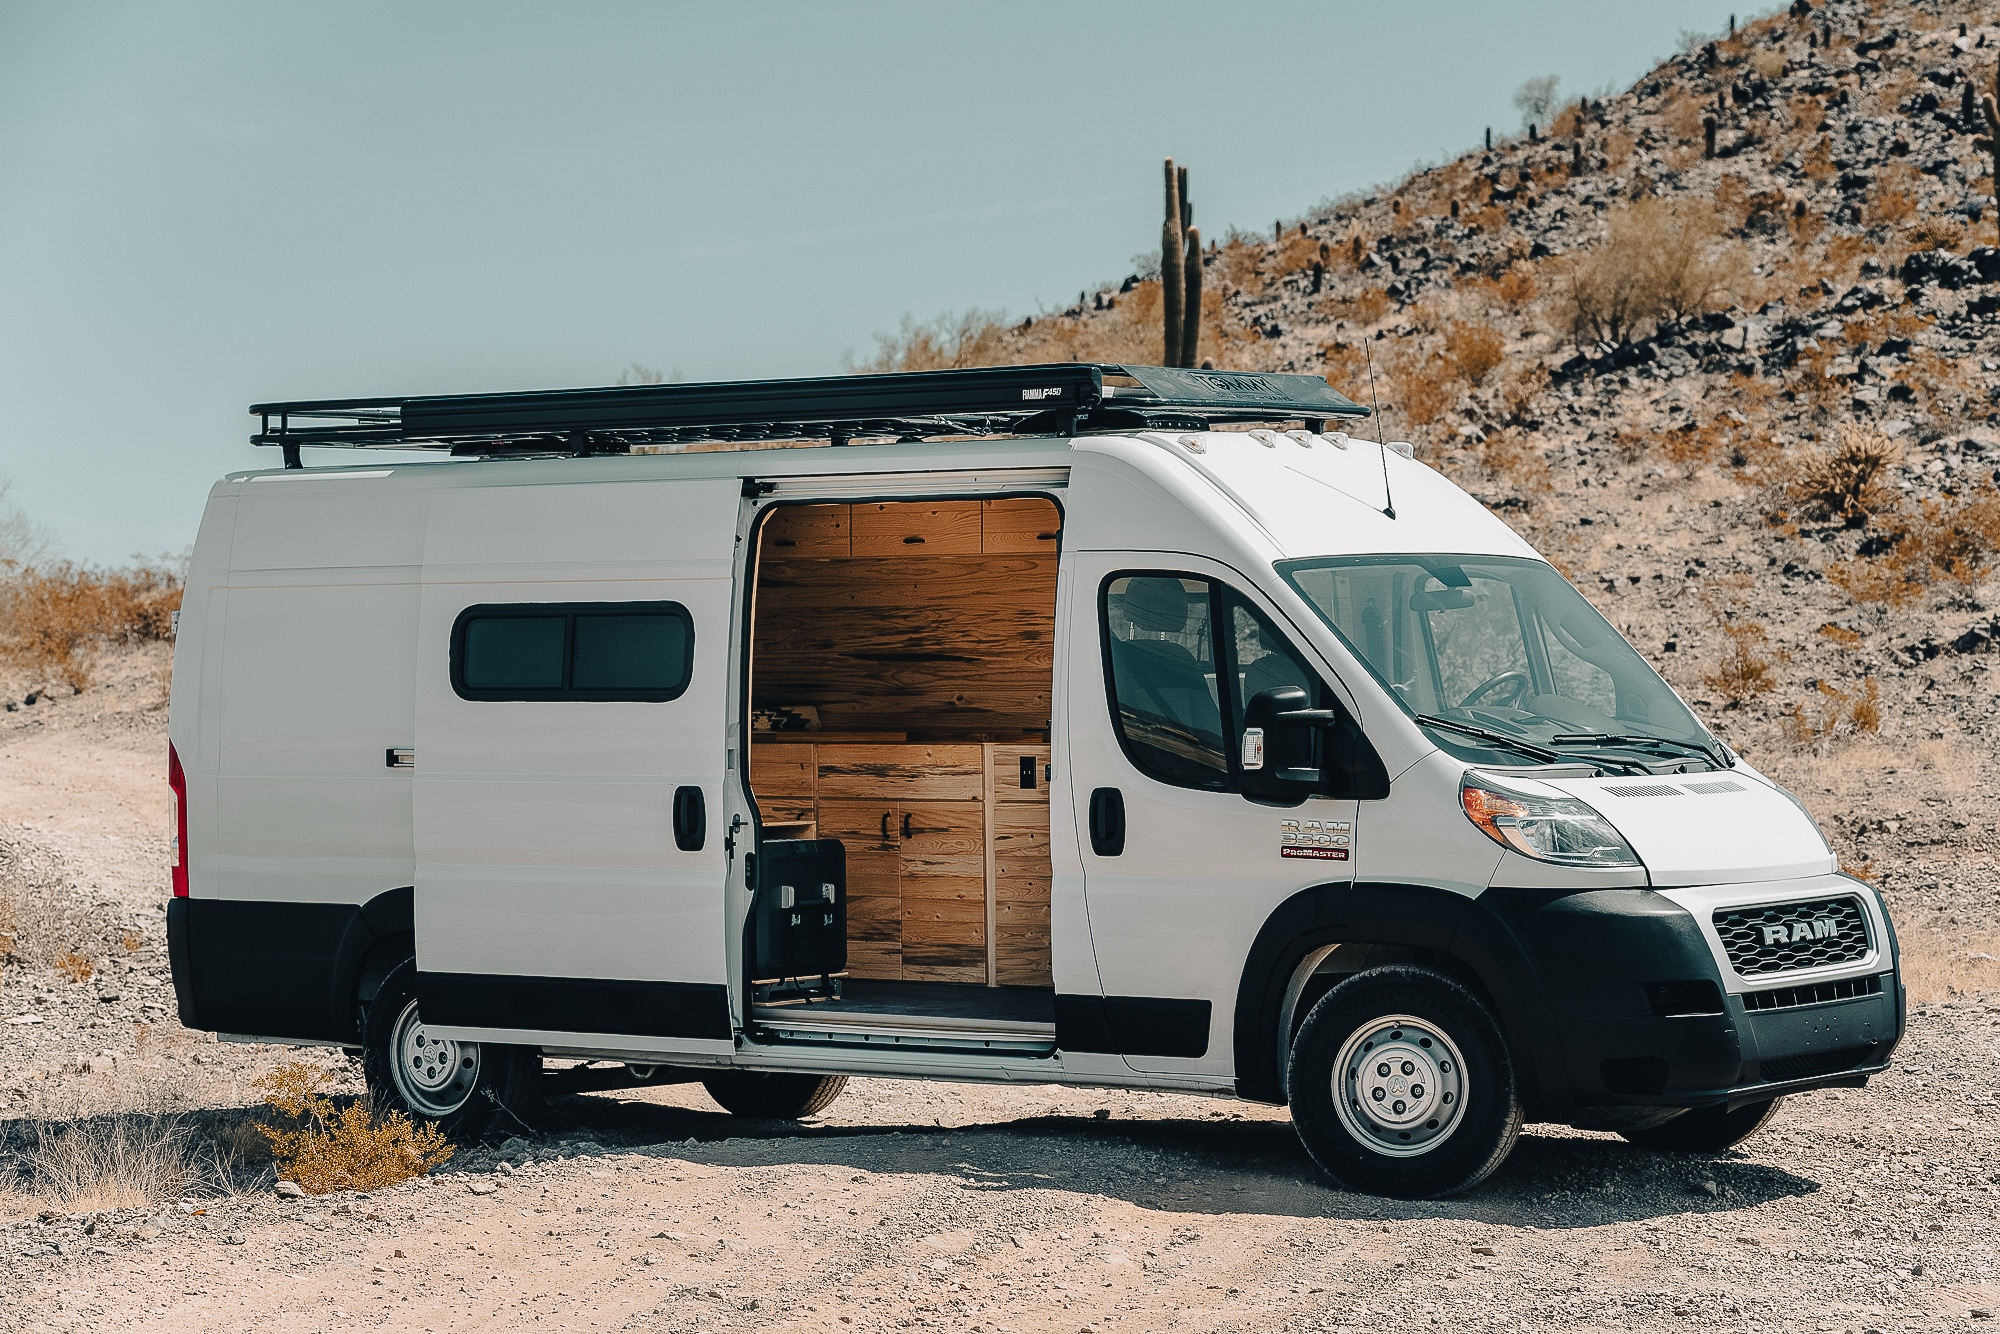 Ram Promaster Camper Van For Sale In Arizona Tommy Camper Vans